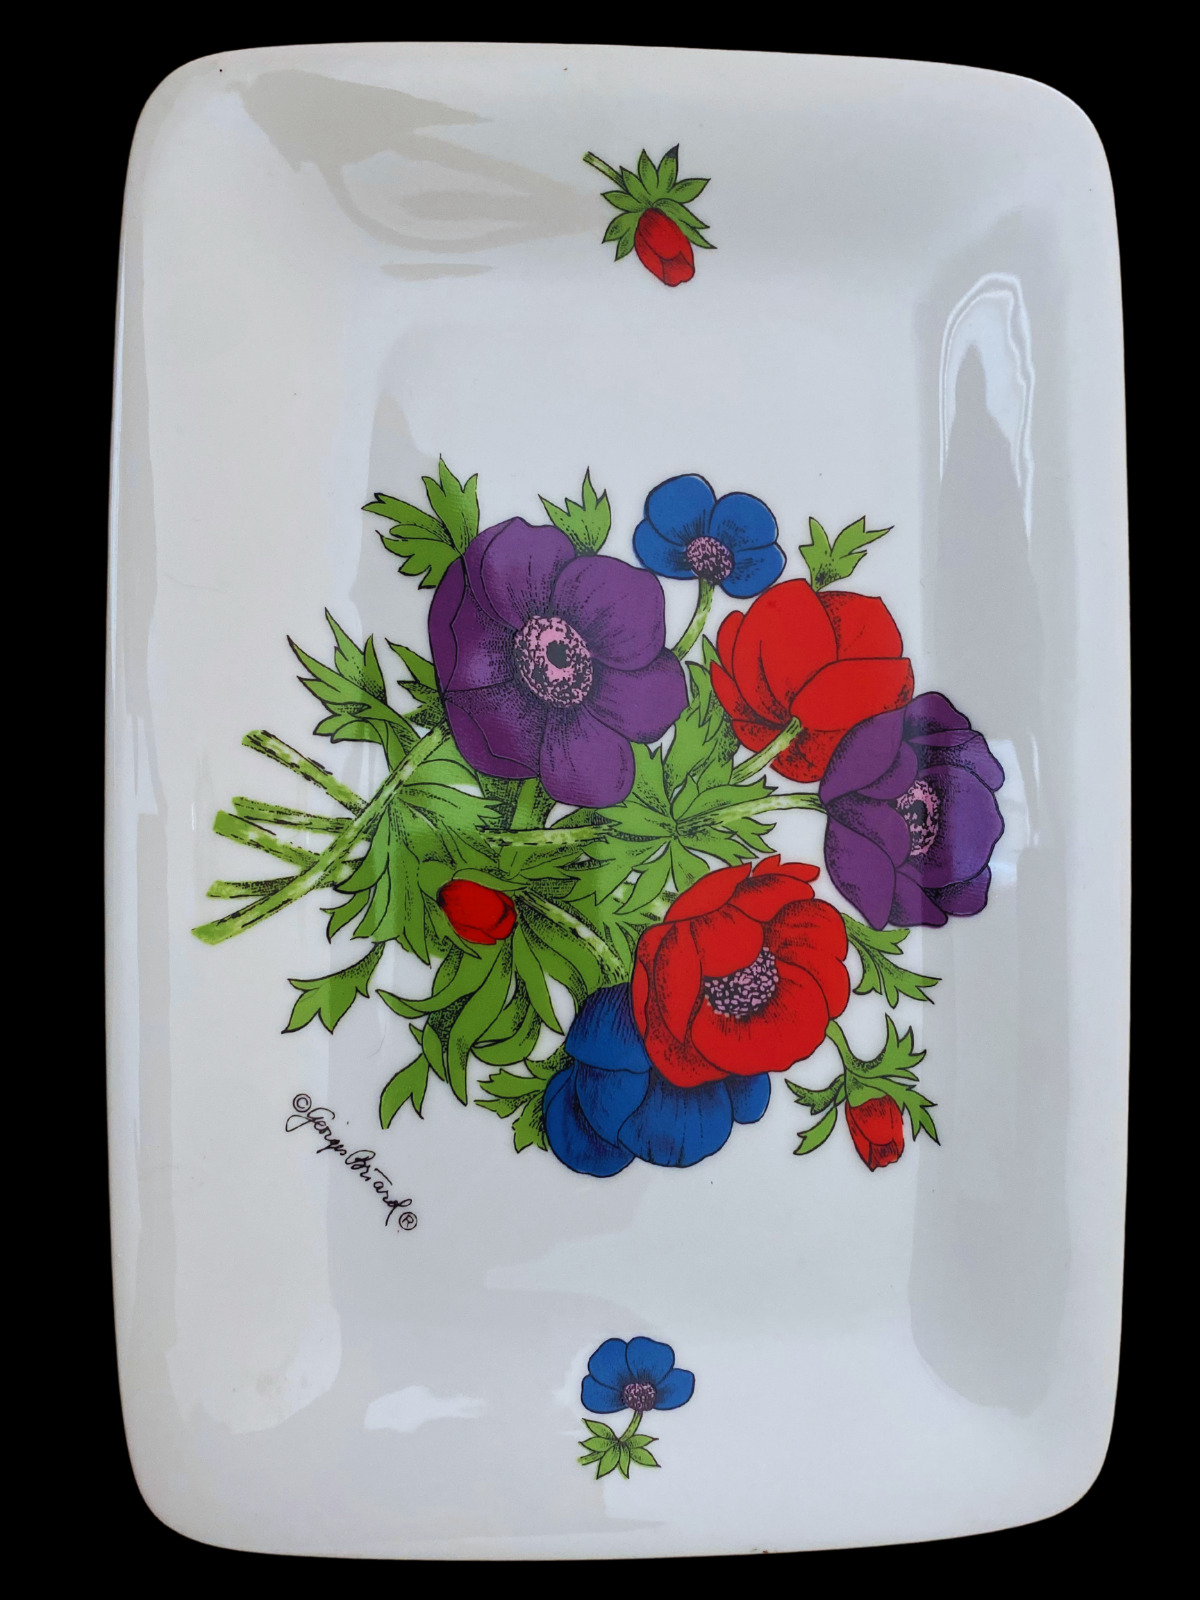 Vintage Georges Briard Tray “Anemone” Pattern (Retro, Floral, Poppy, MCM)